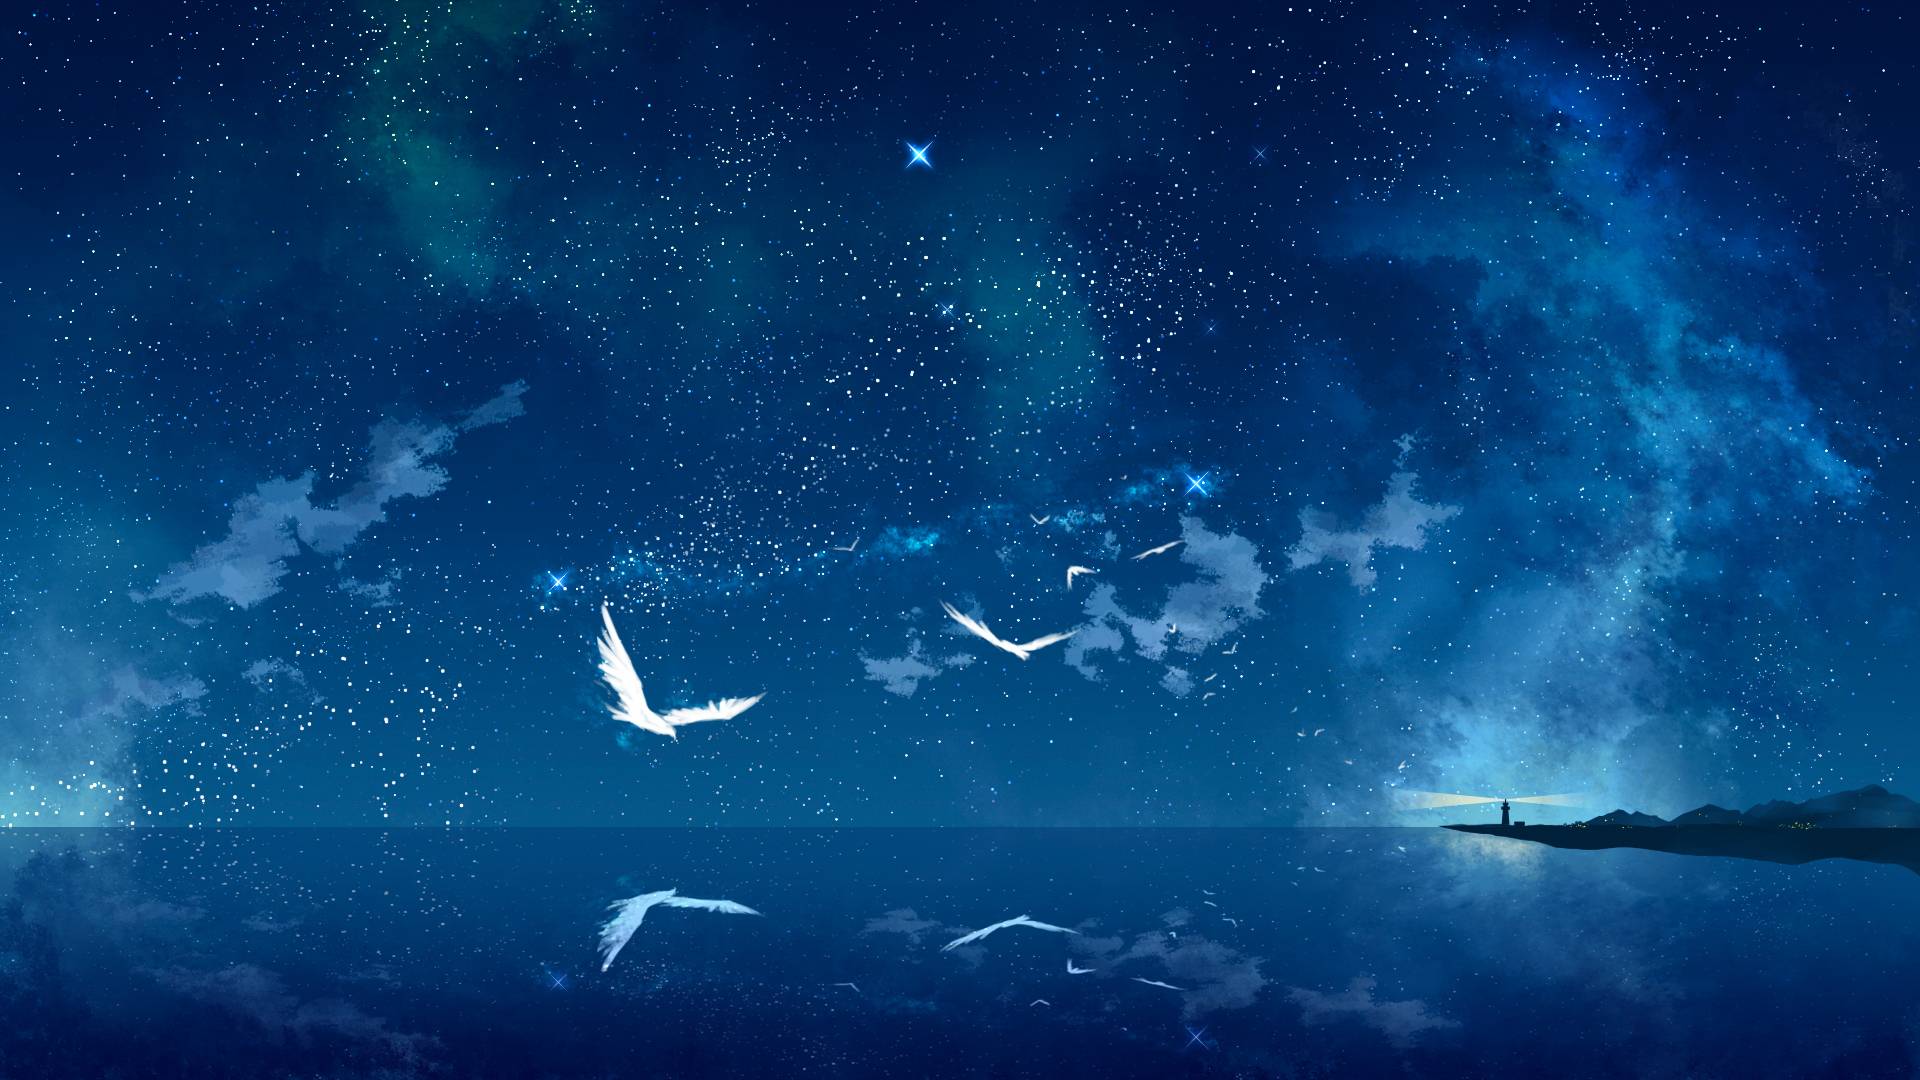 Anime Night Sky wallpaper   1135536